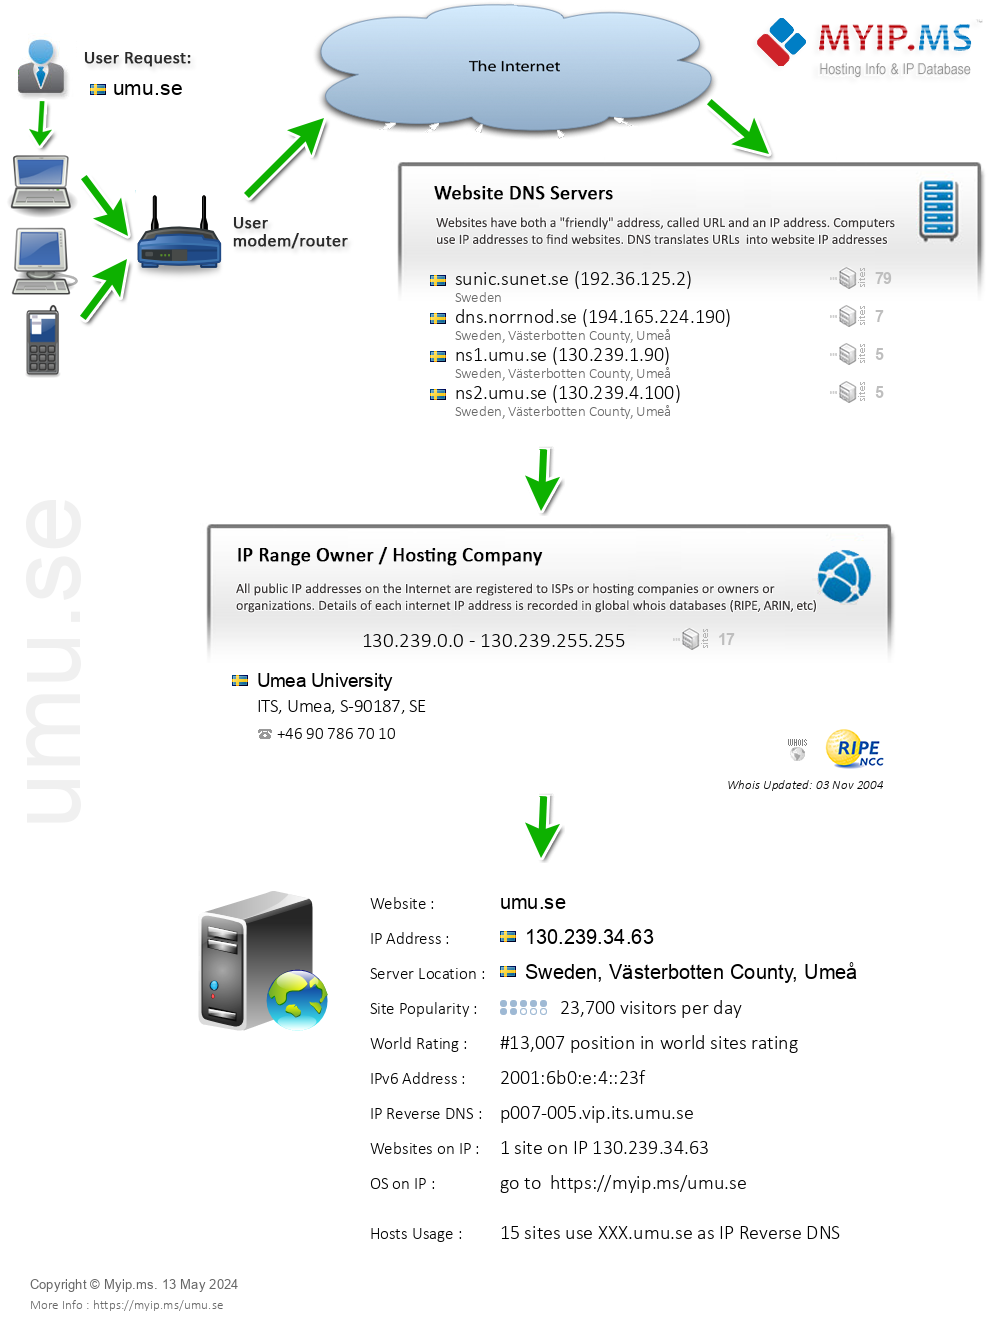 Umu.se - Website Hosting Visual IP Diagram